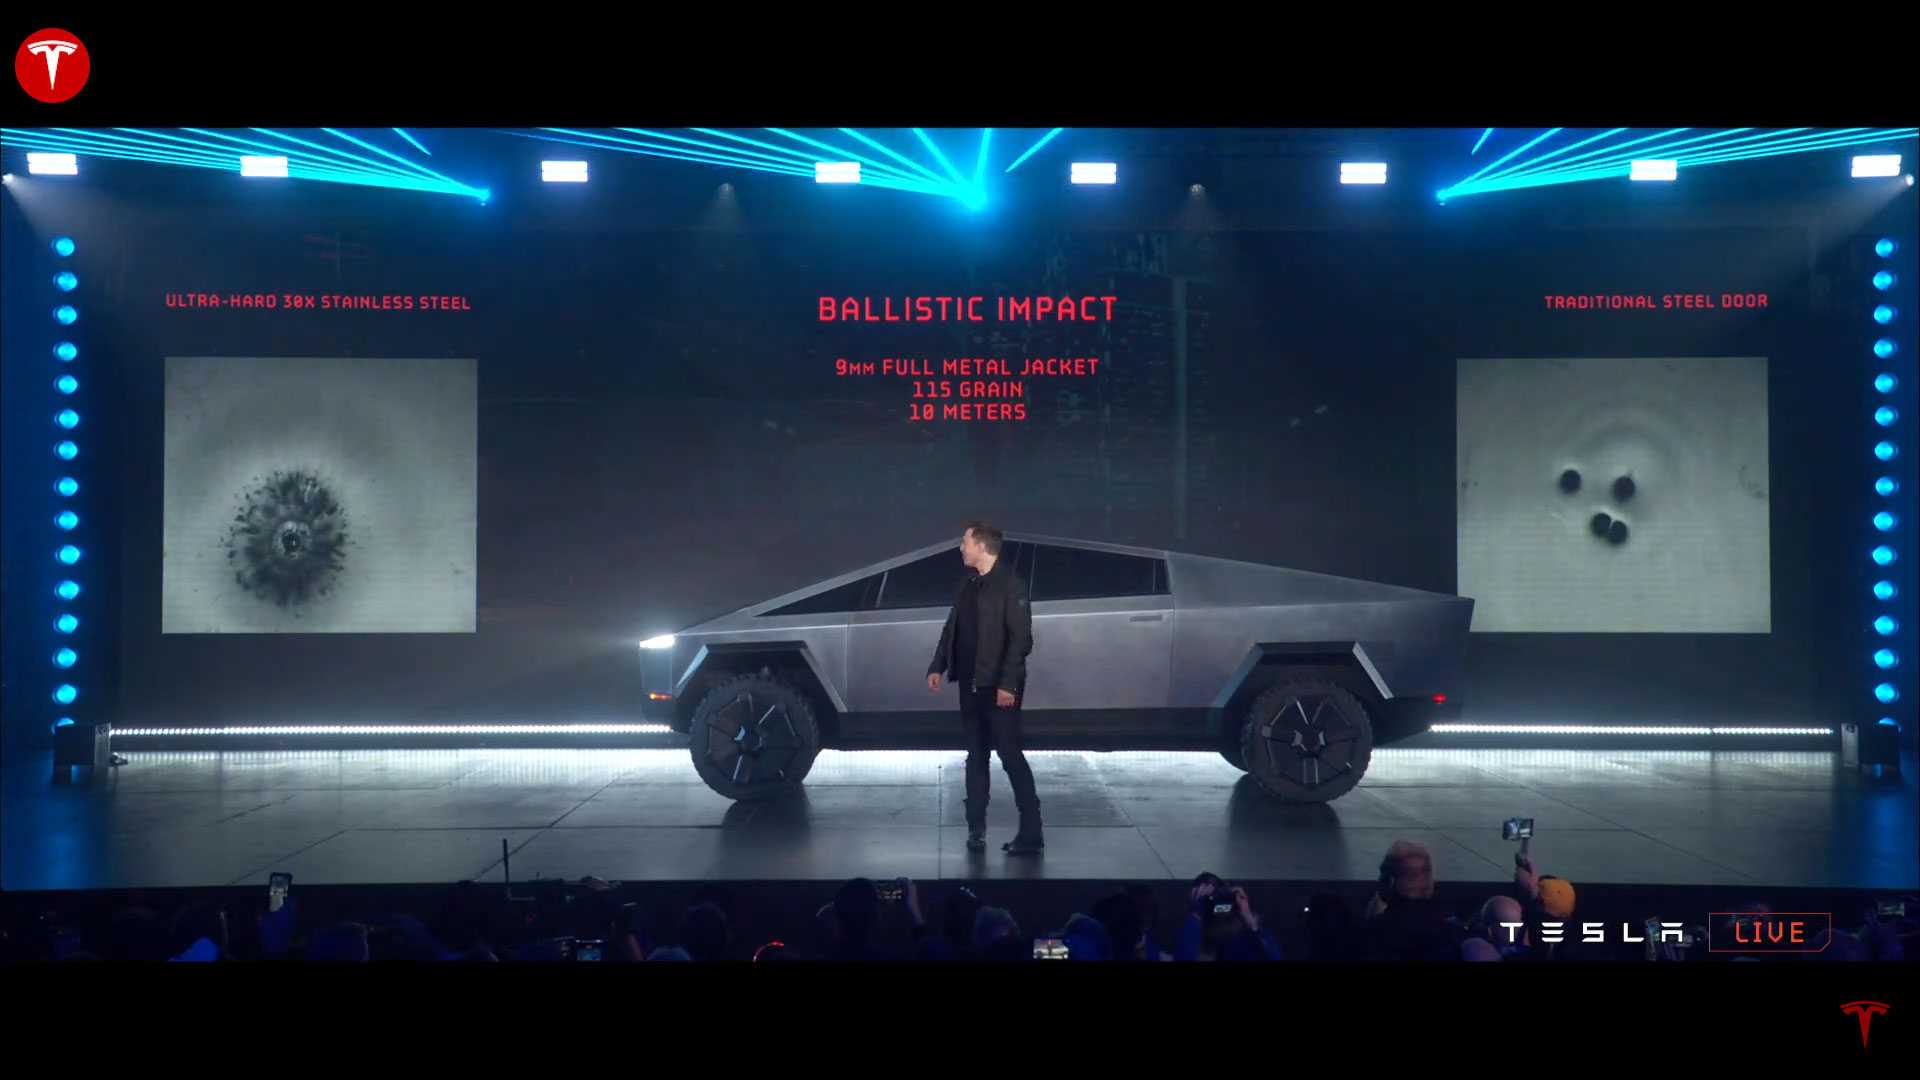 Tesla Cybertruck Image Overload: See The Pickup Inside